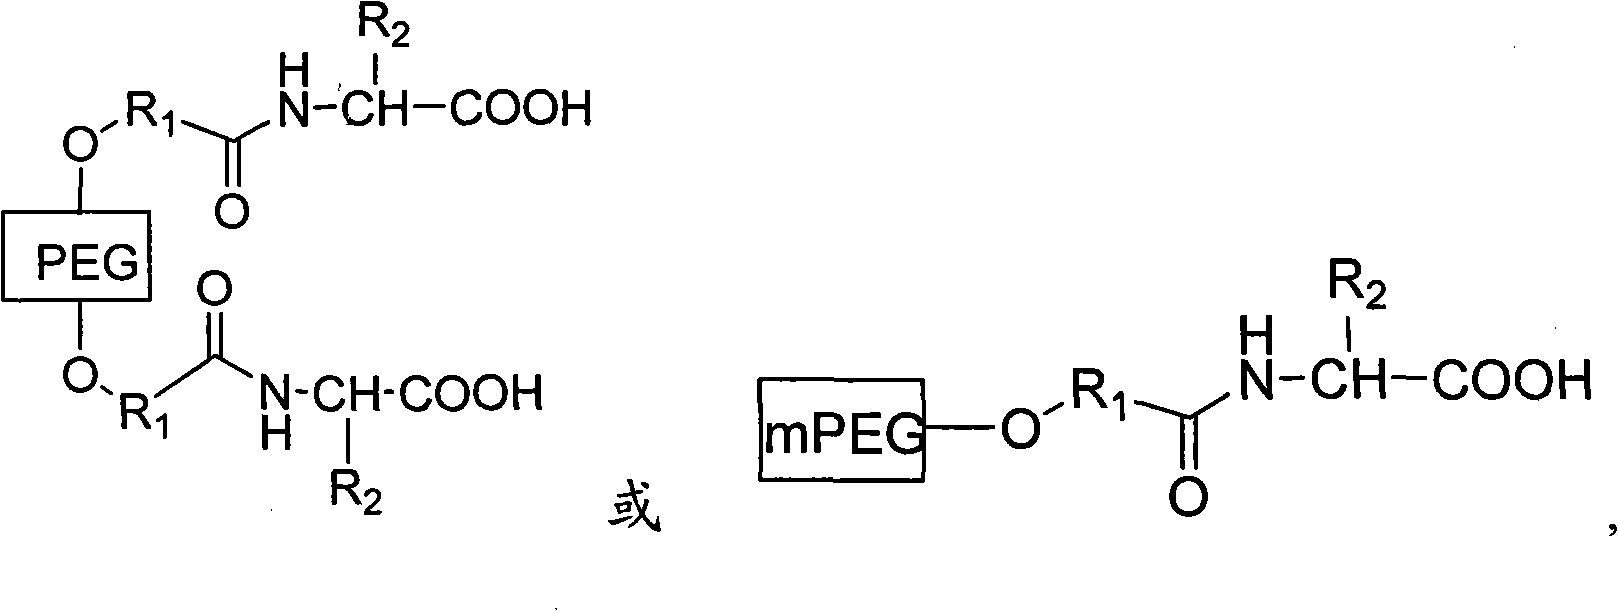 PEG (Polyethylene Glycol), mPEG (Methoxy Polyethylene Glycol) chemical modifier and method thereof for preparing water-soluble resveratrol prodrug